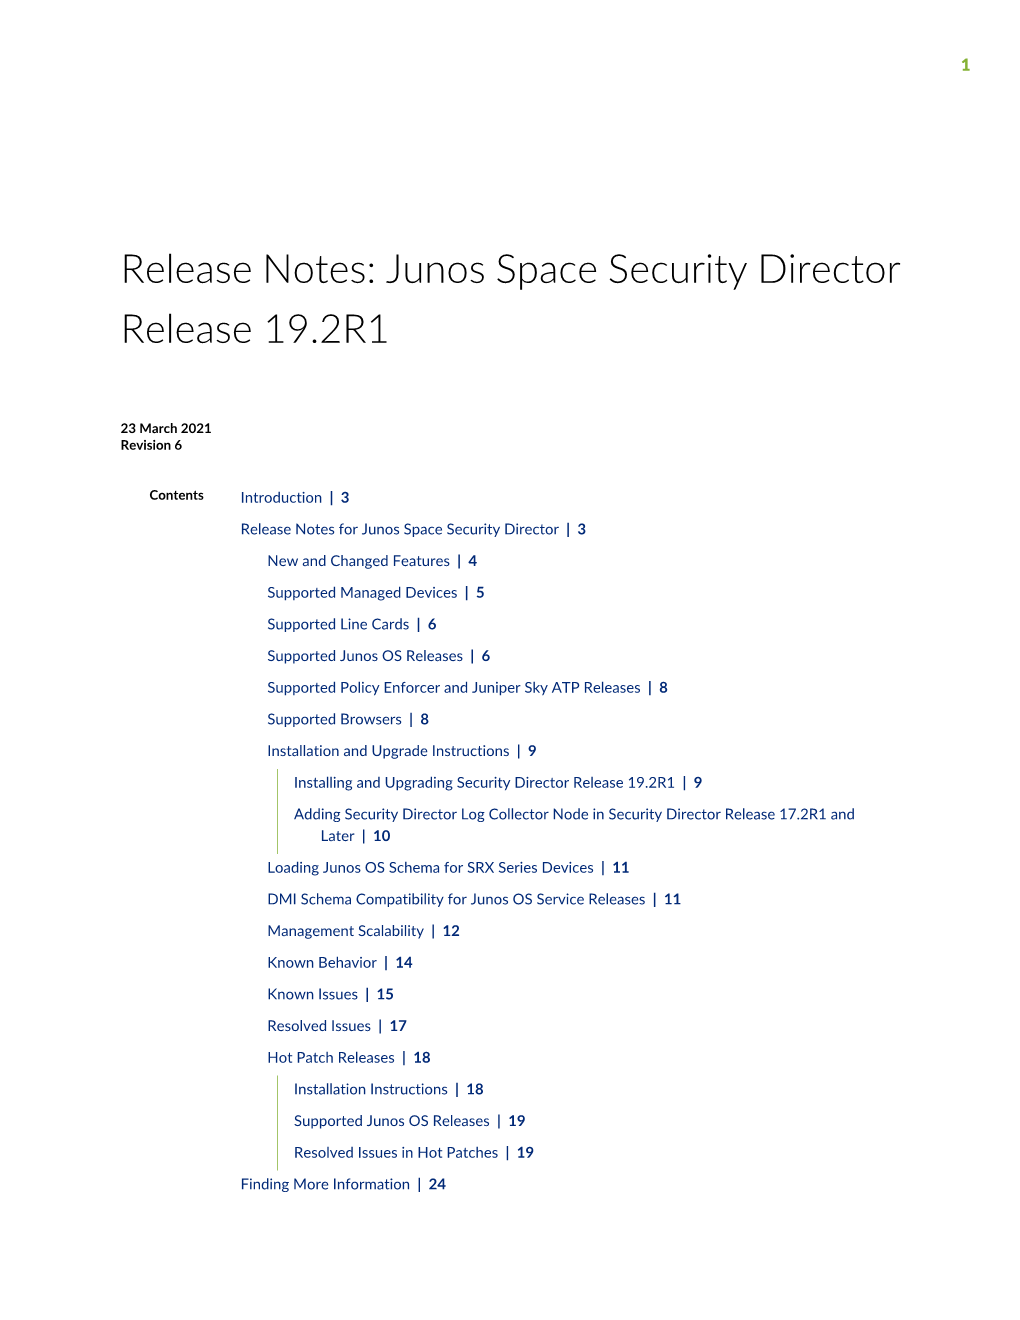 Junos Space Security Director Release 19.2R1